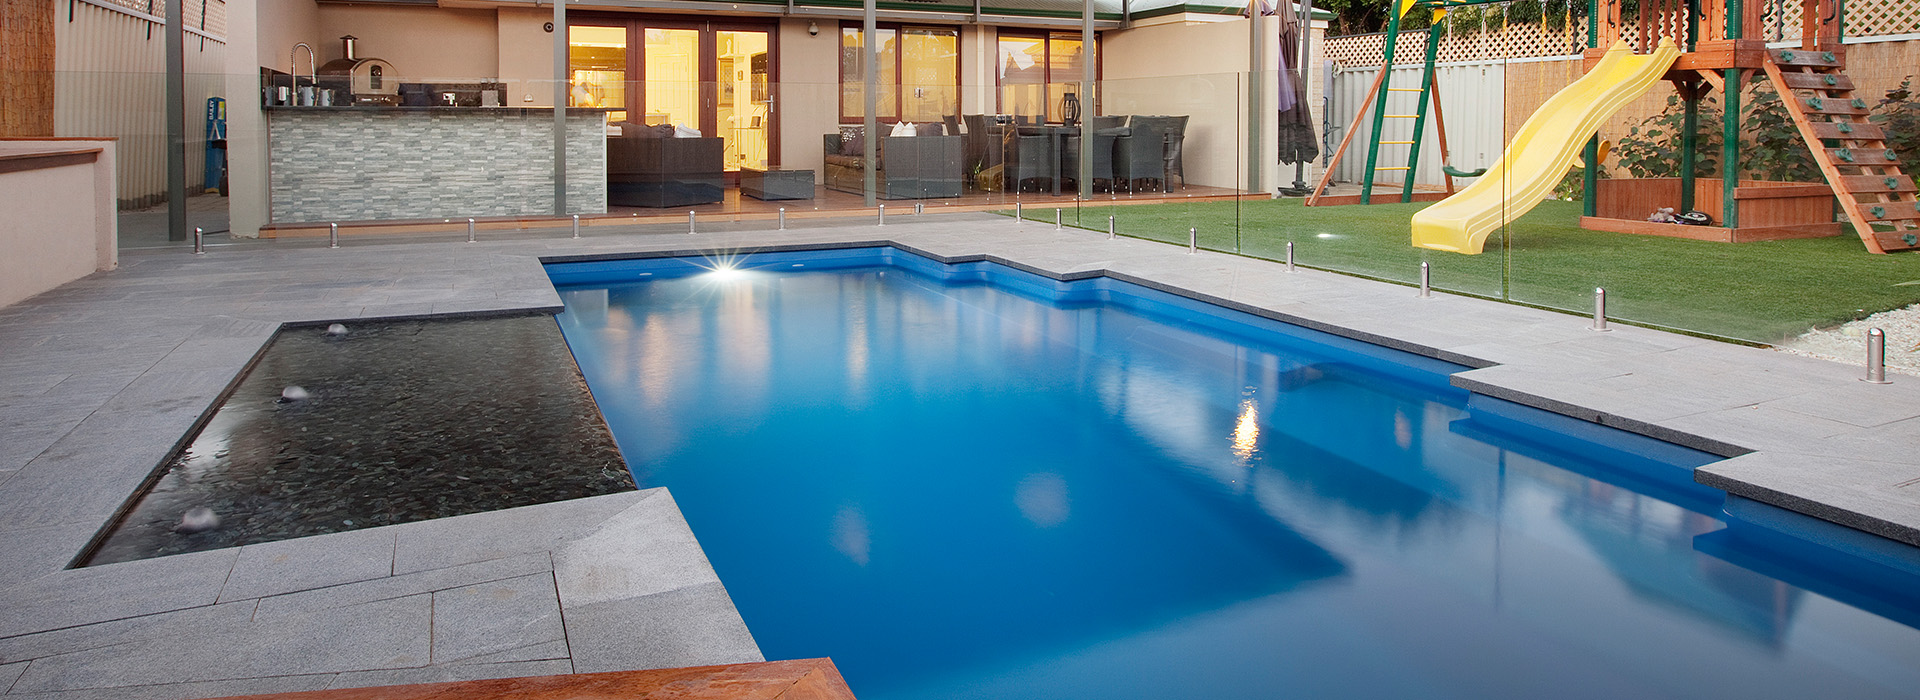 Fibreglass Swimming Pools Melbourne